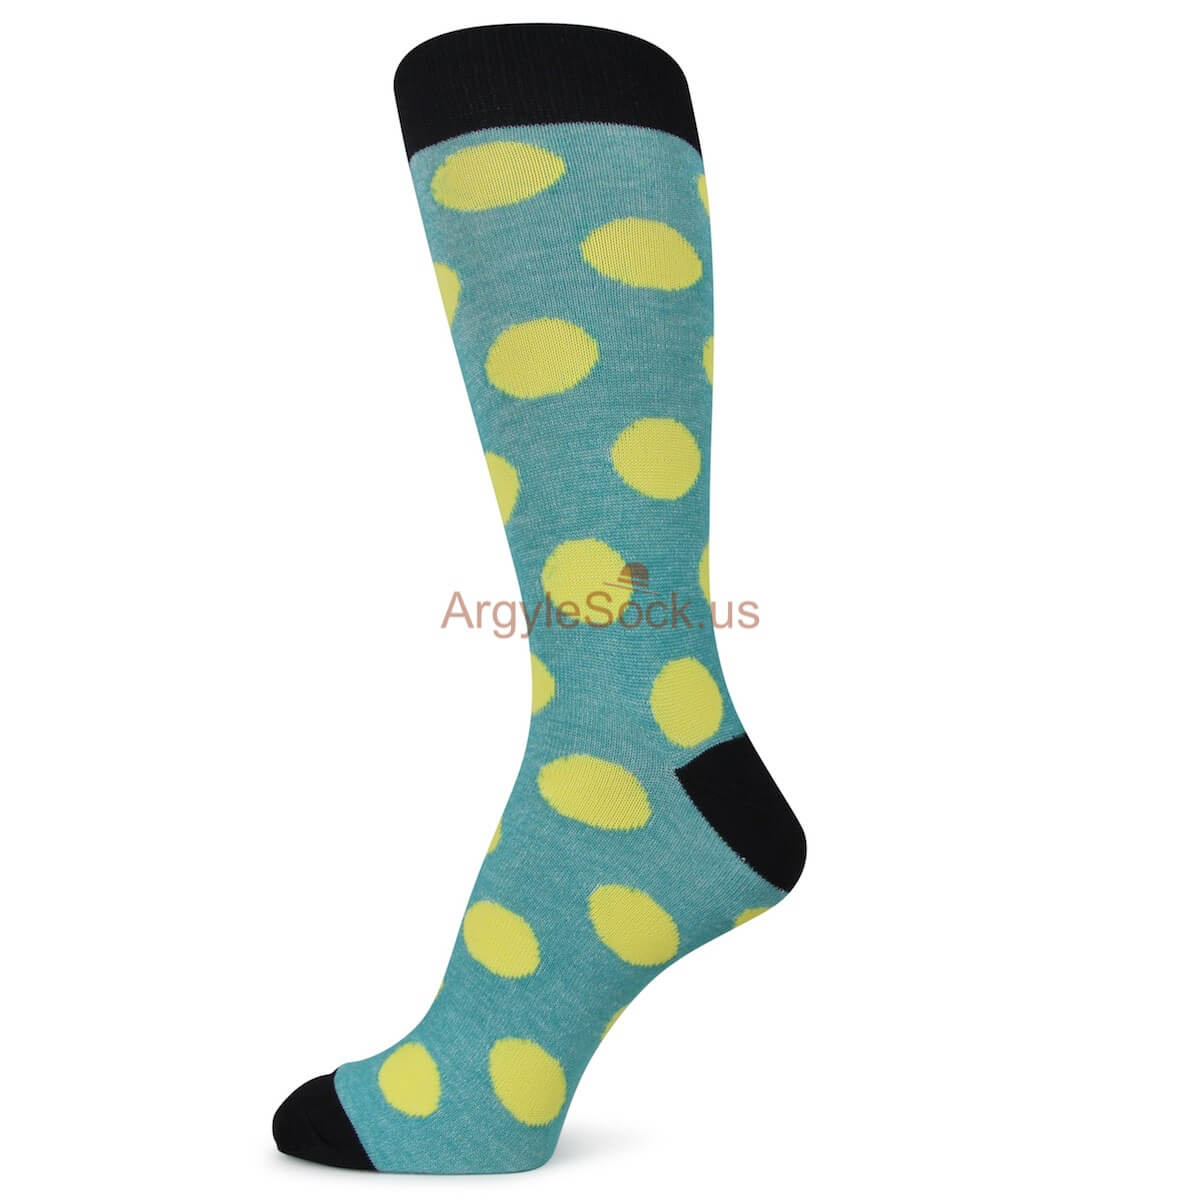 Mint w/ Black Toe & Heel, Big Yellow Spots Socks for Men